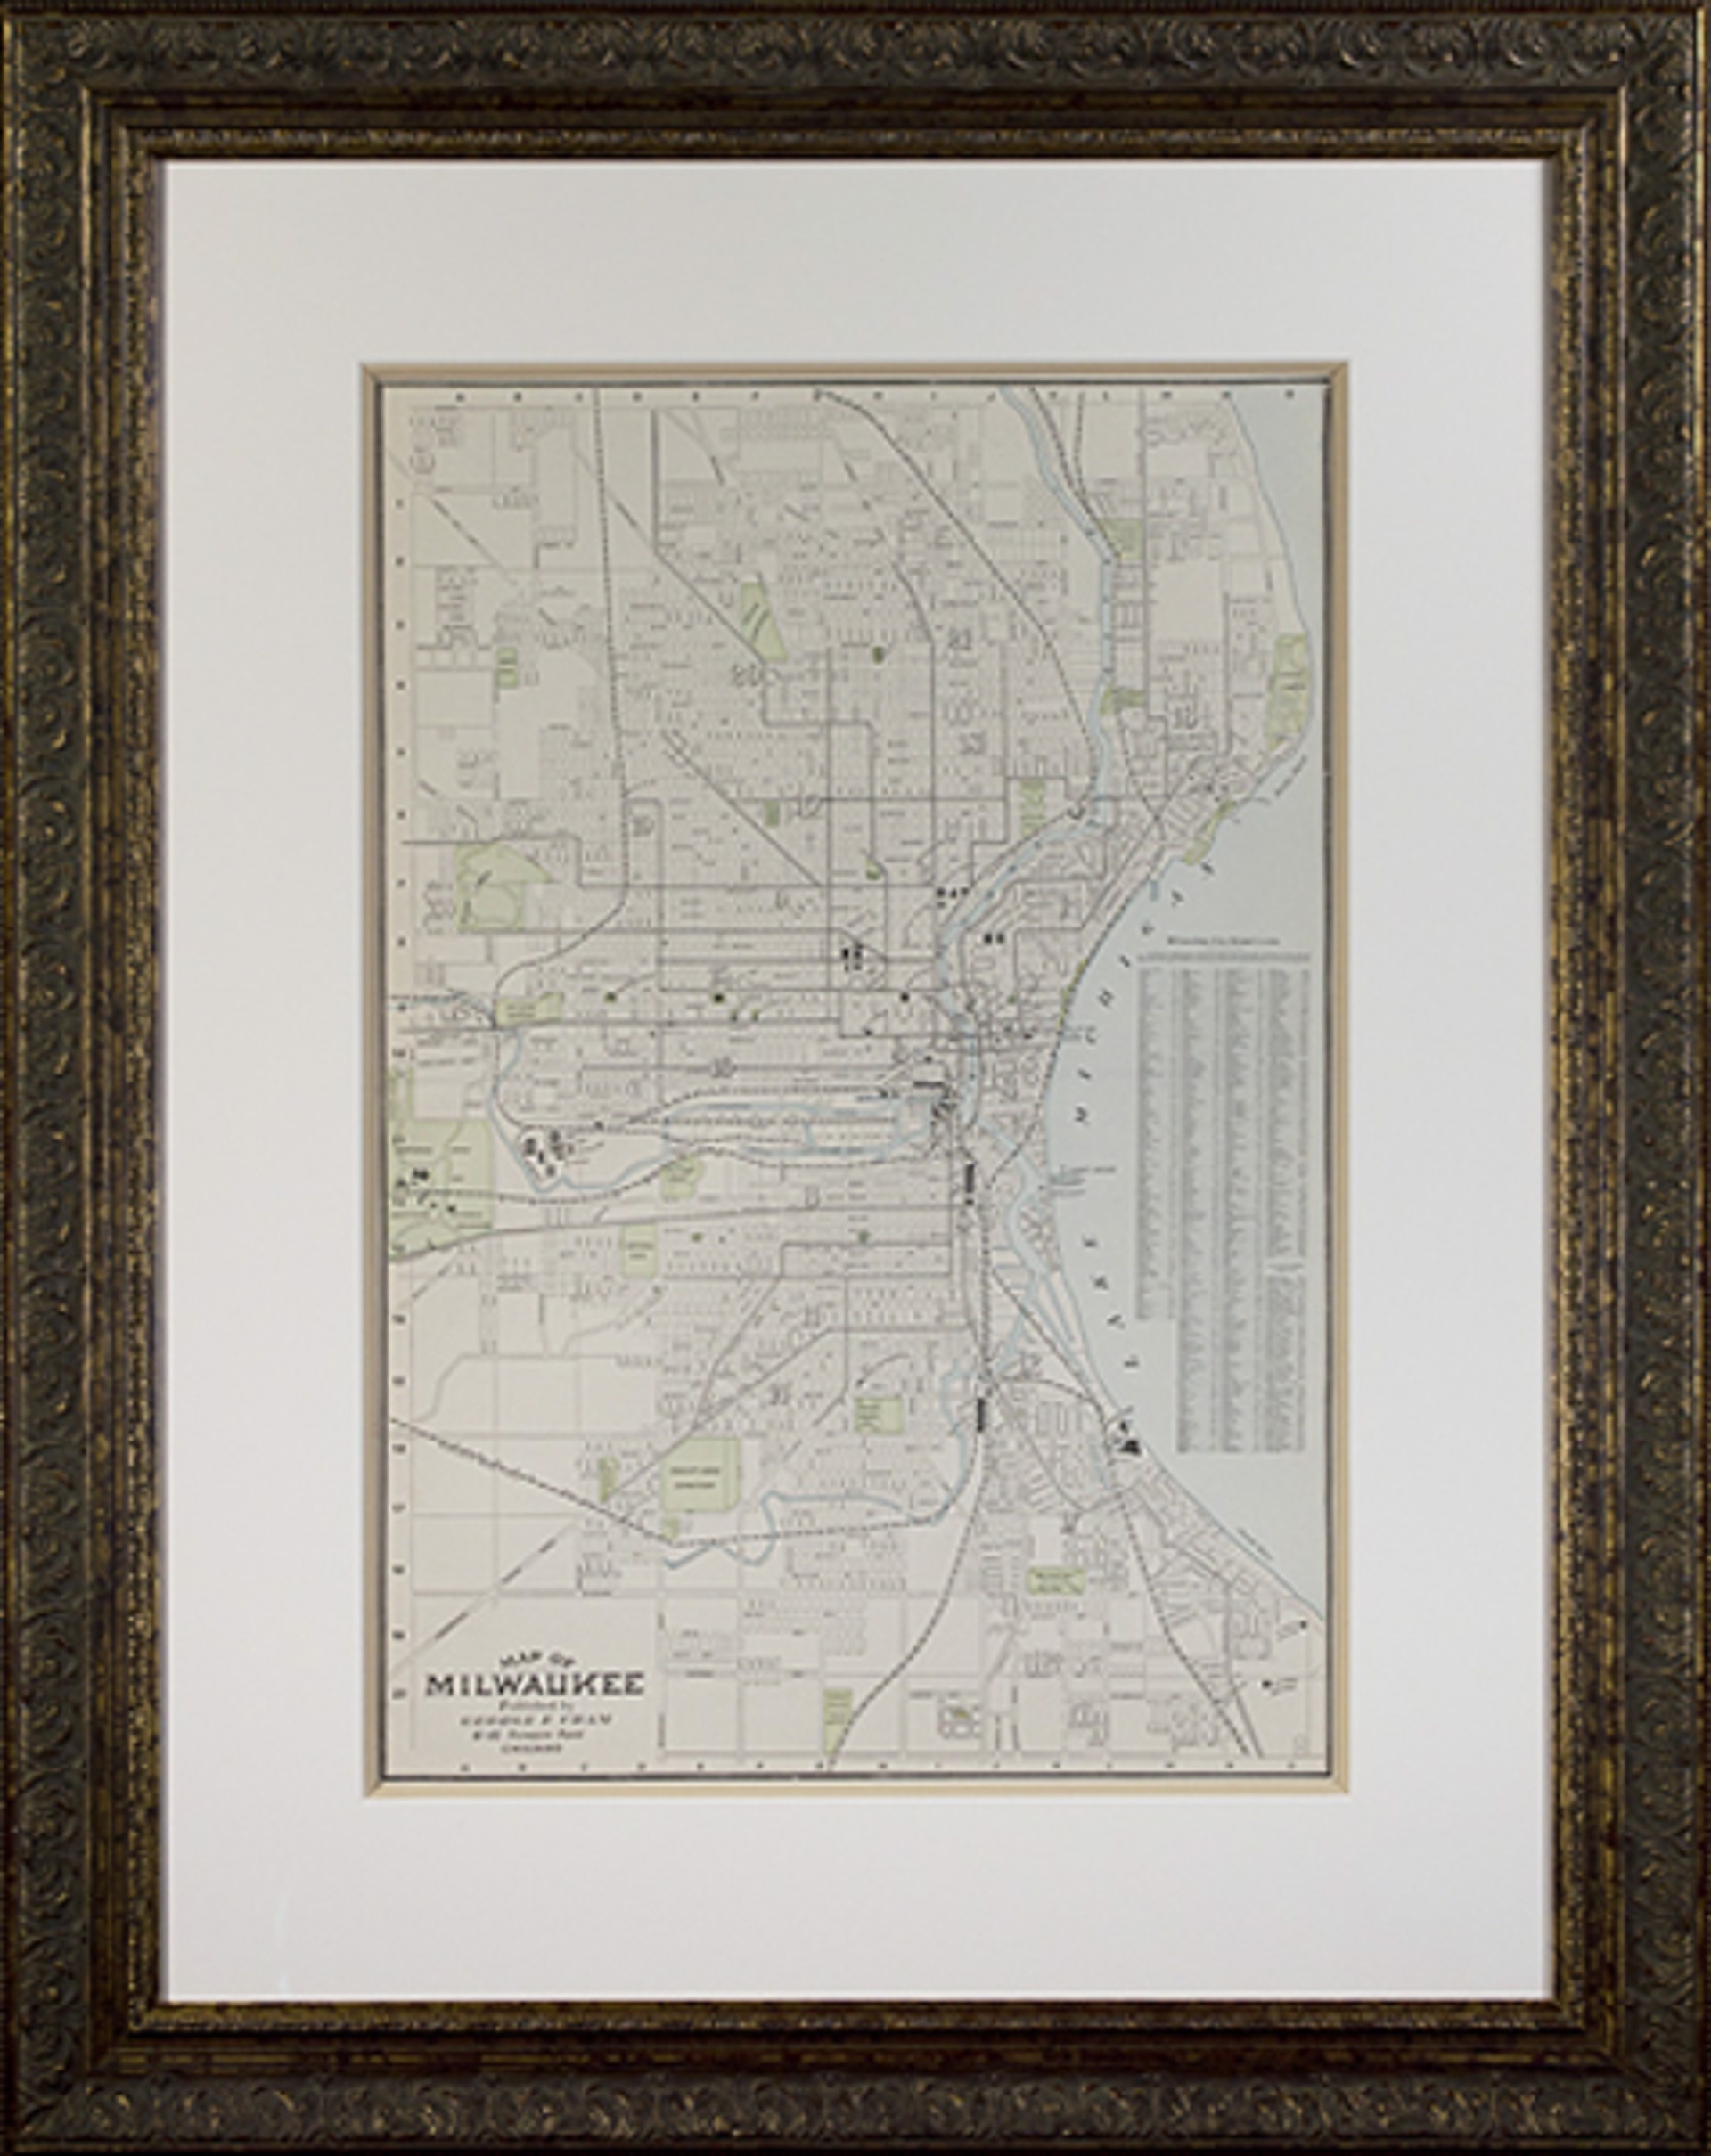 Map of Milwaukee by George F. Cram